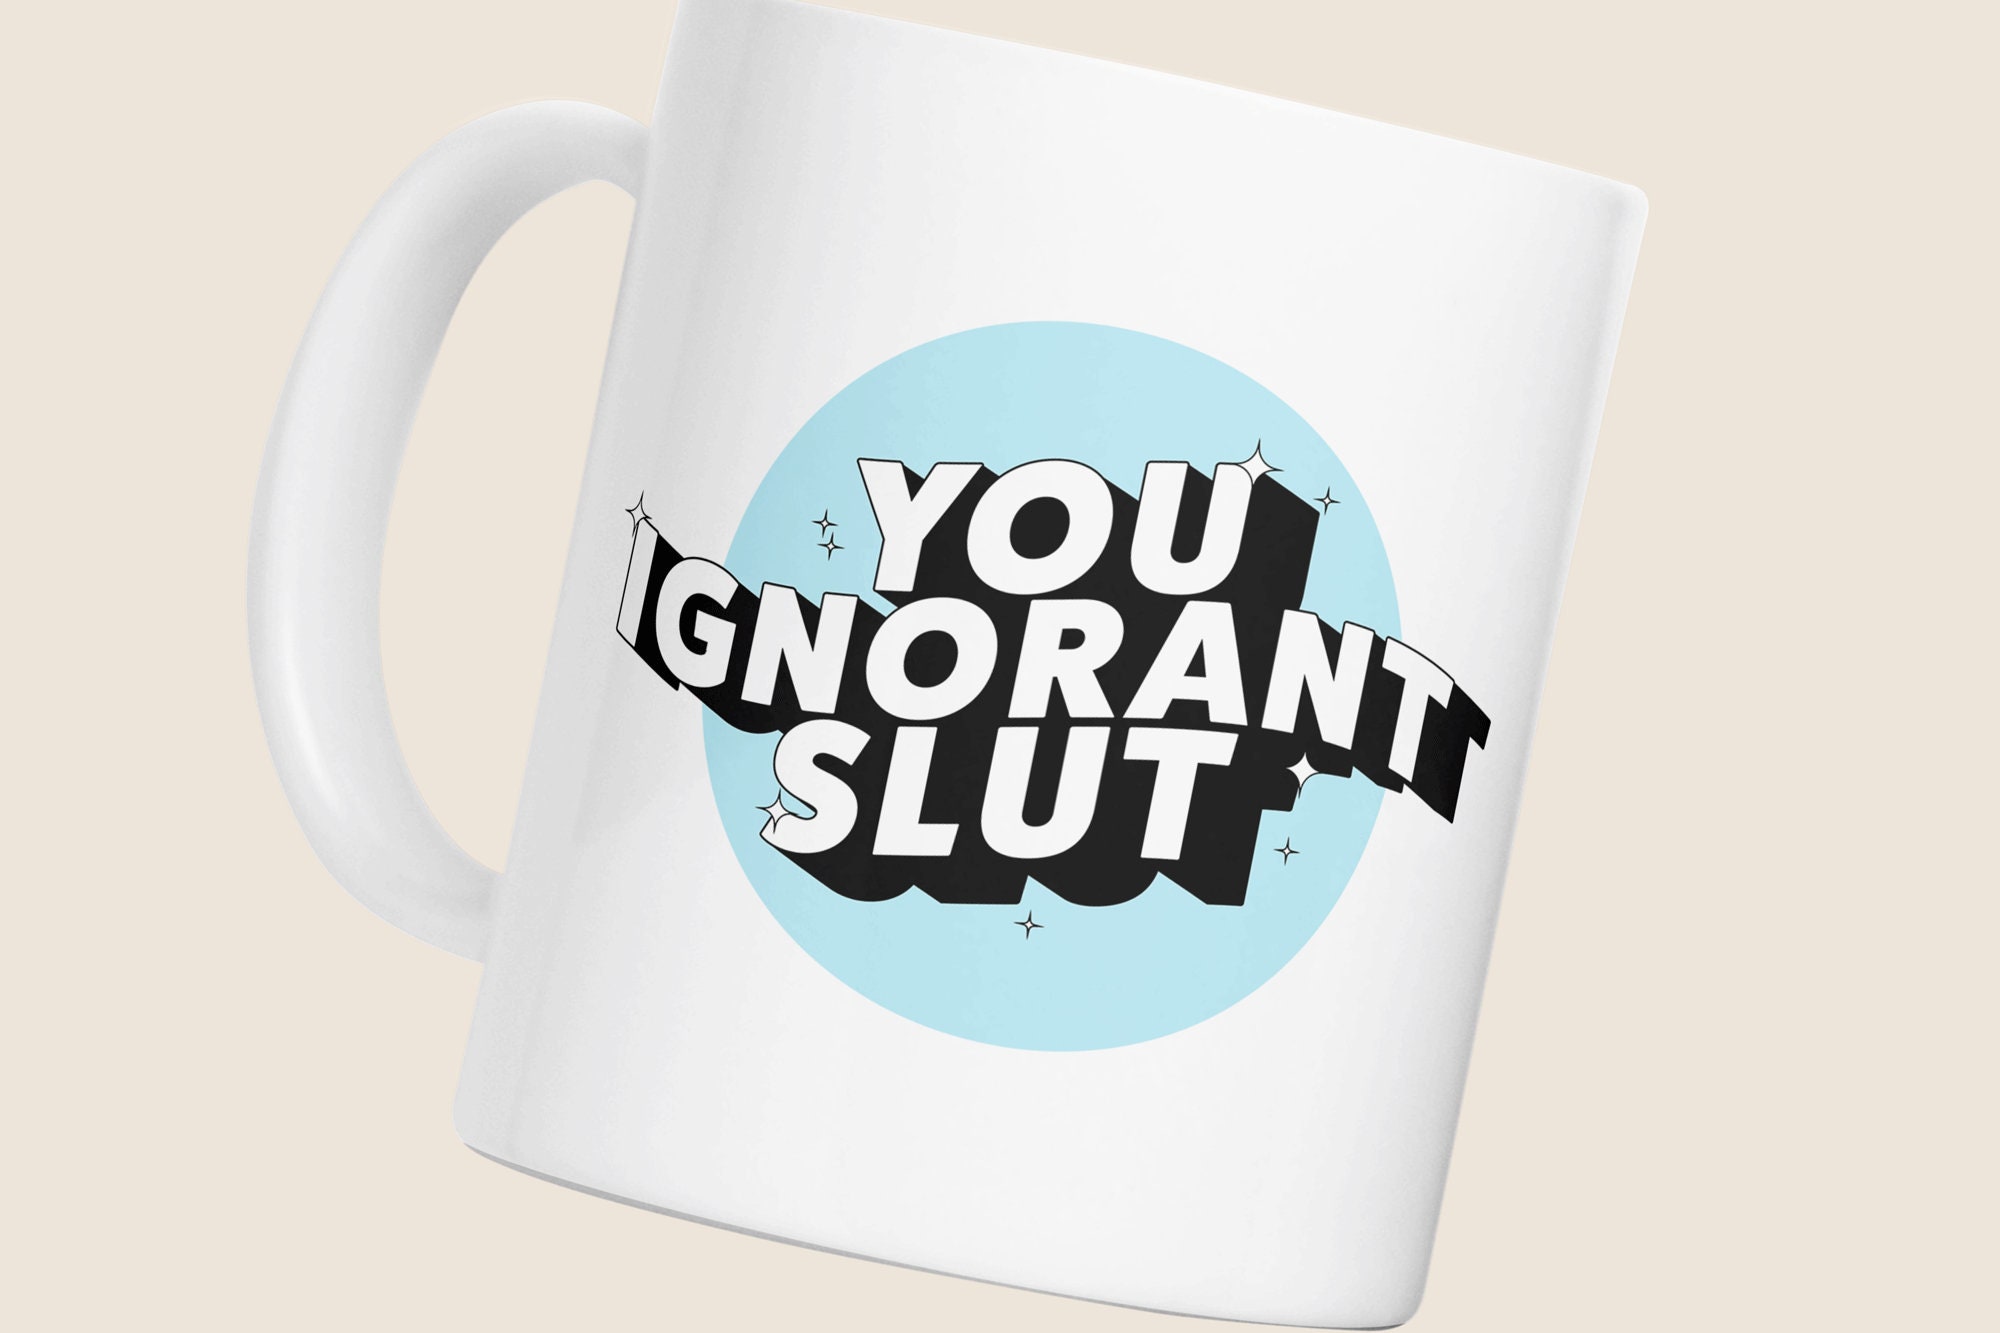 Coffee Slut Tumbler Funny Mug Gift for Coffee Addict Best Friend Gift –  Cute But Rude